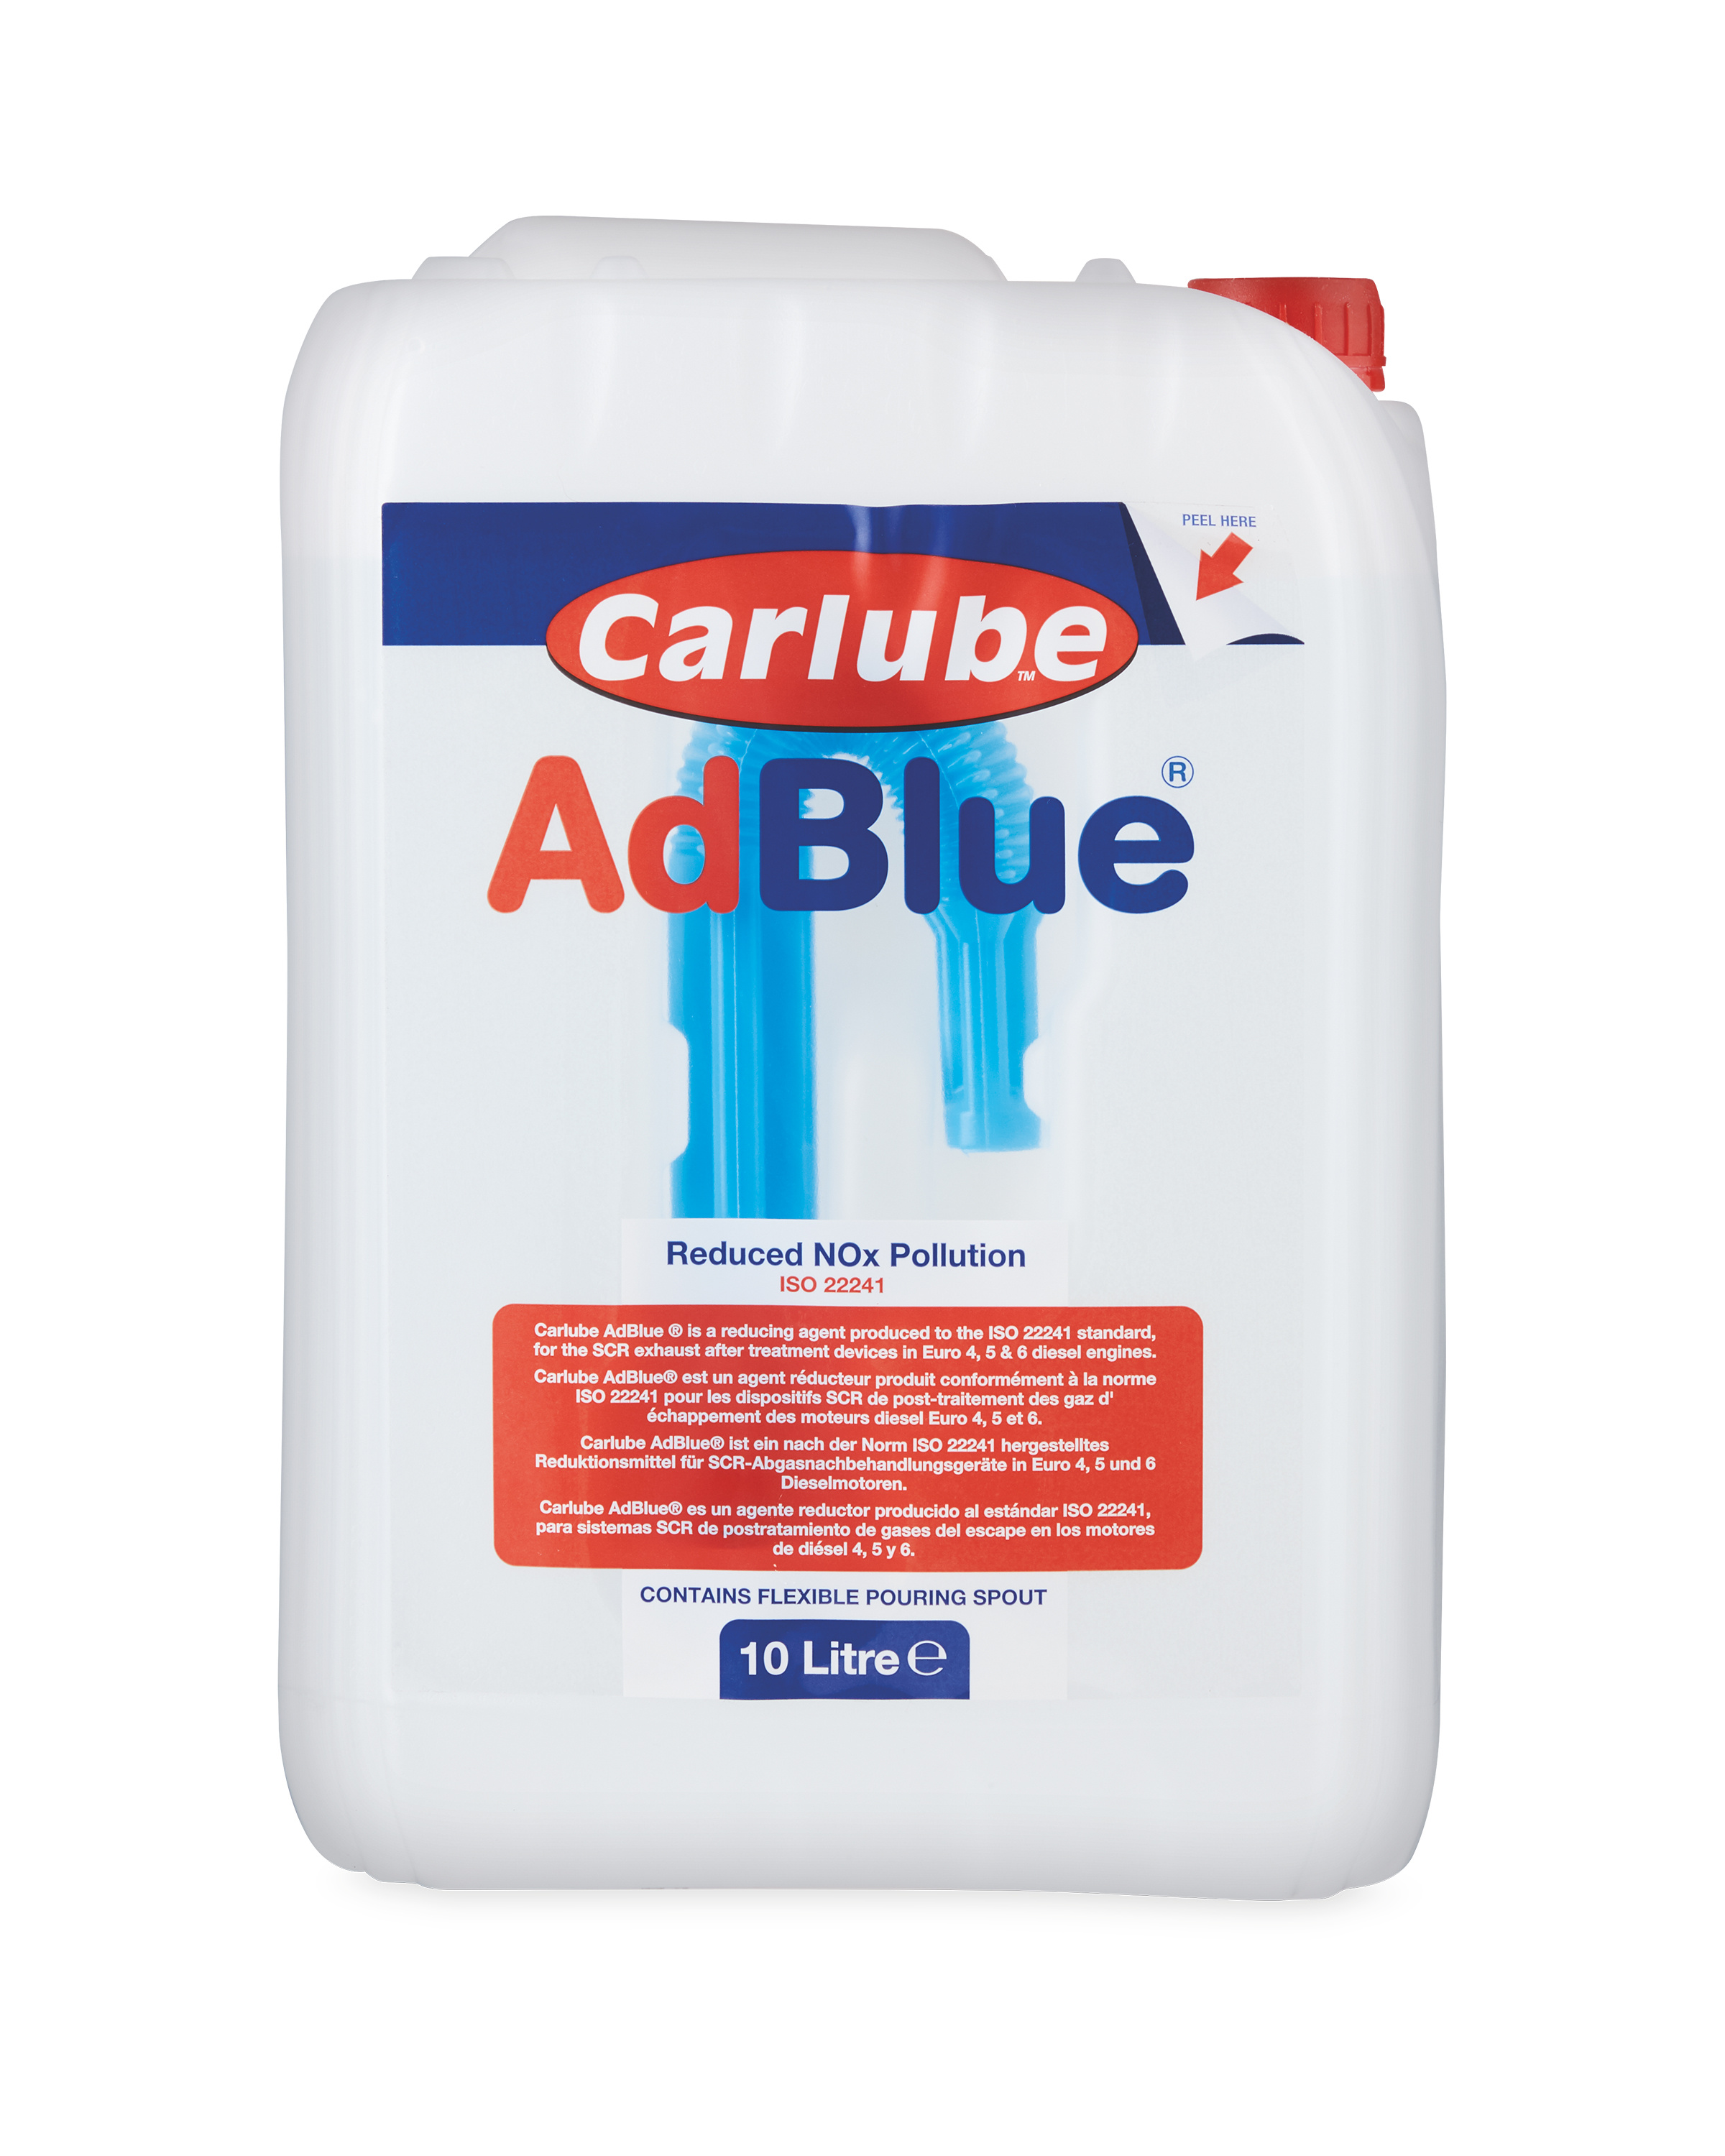 AdBlue 10 Liter x 4 